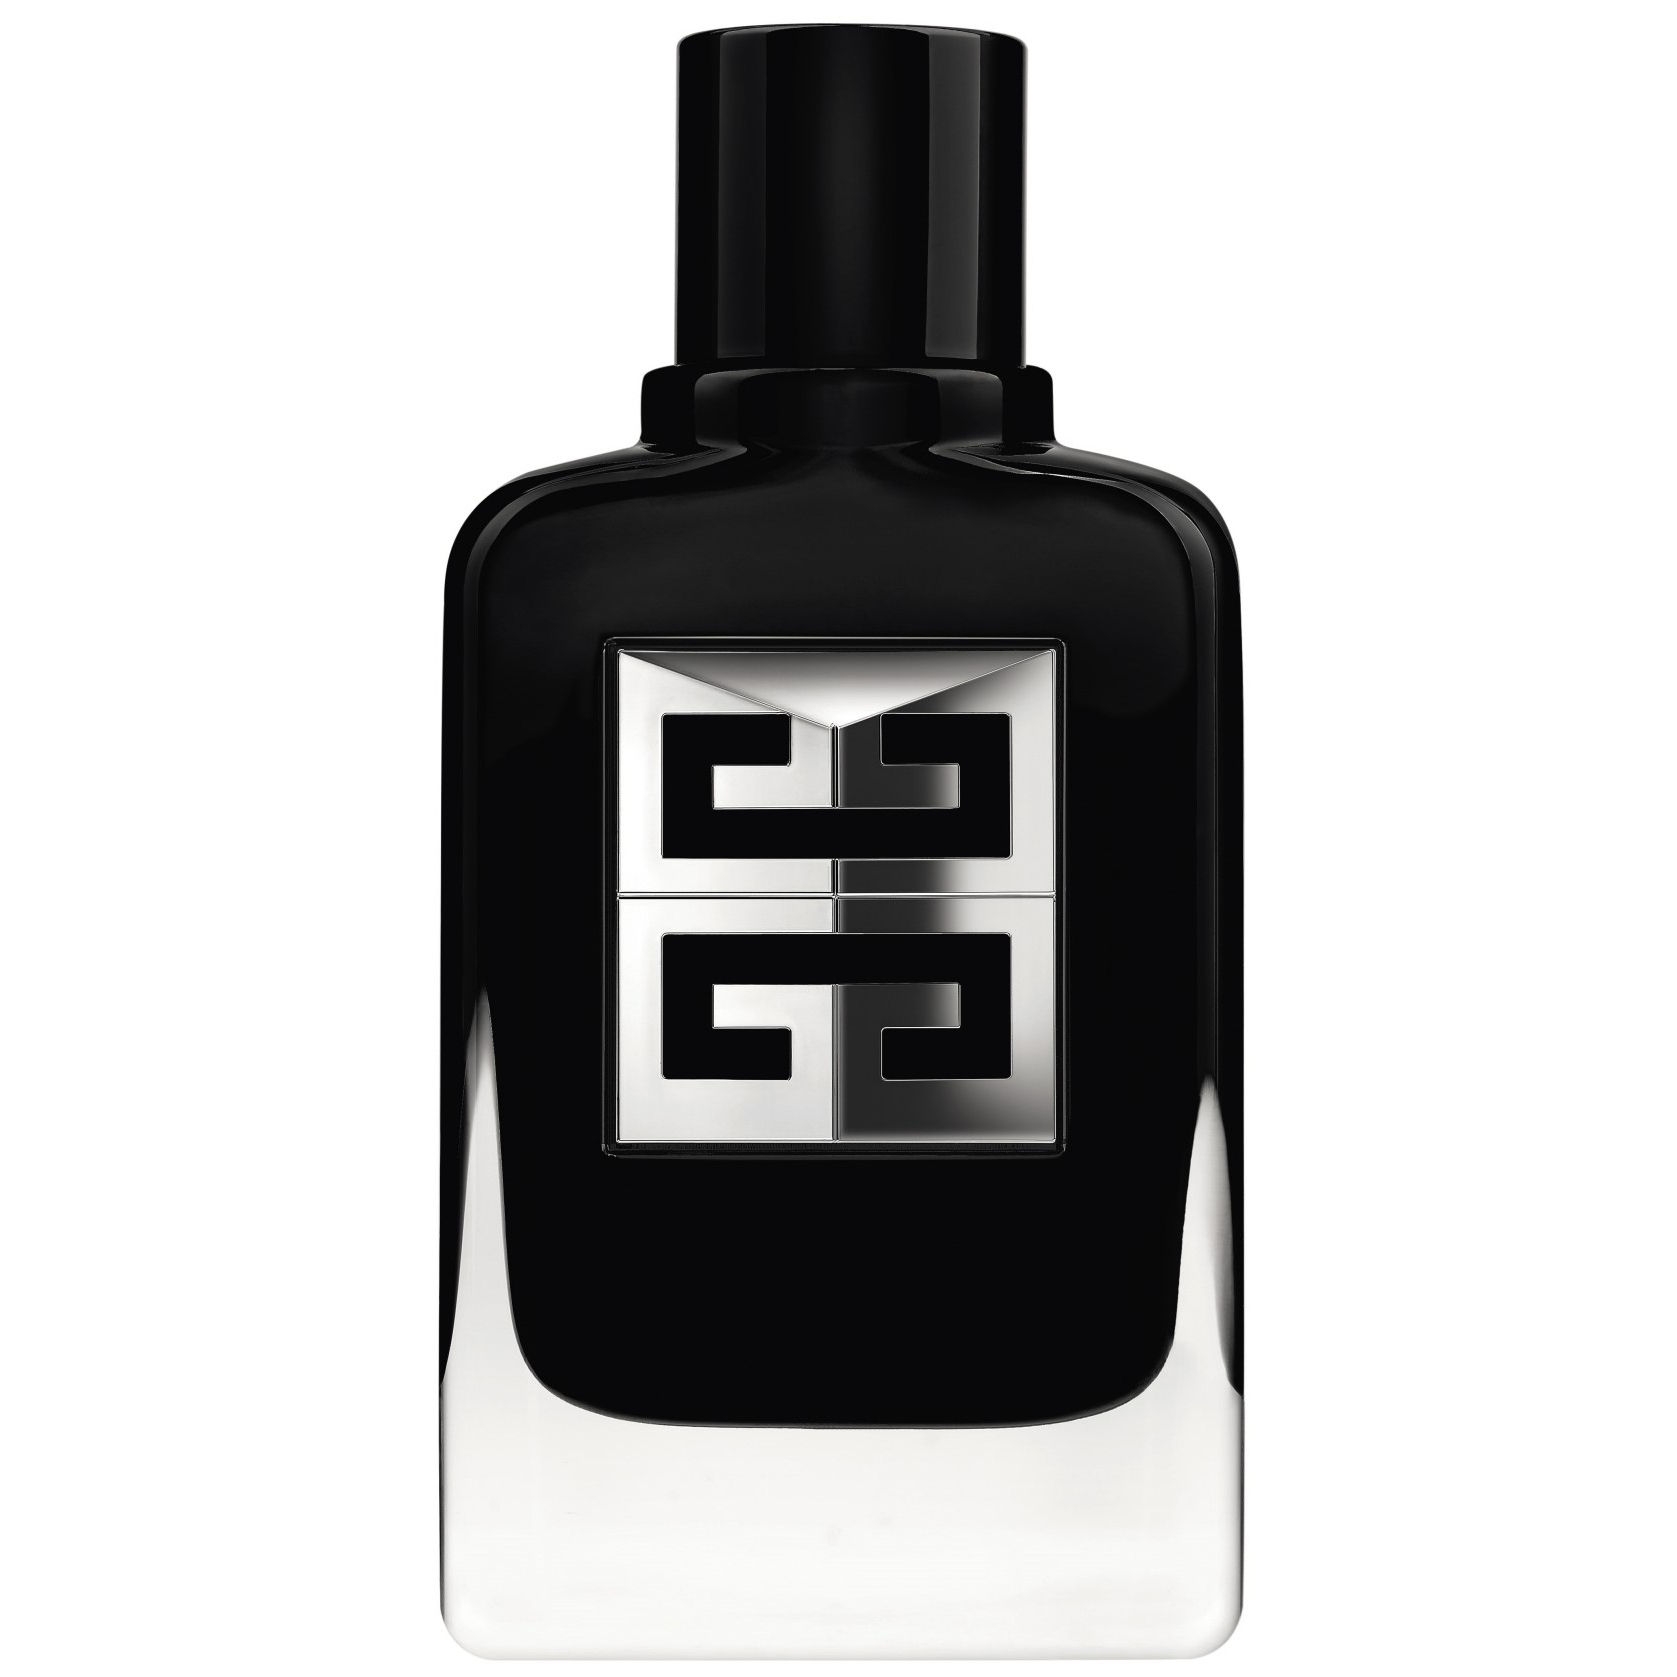 Givenchy Gentleman Society Eau de parfum spray 60 ml